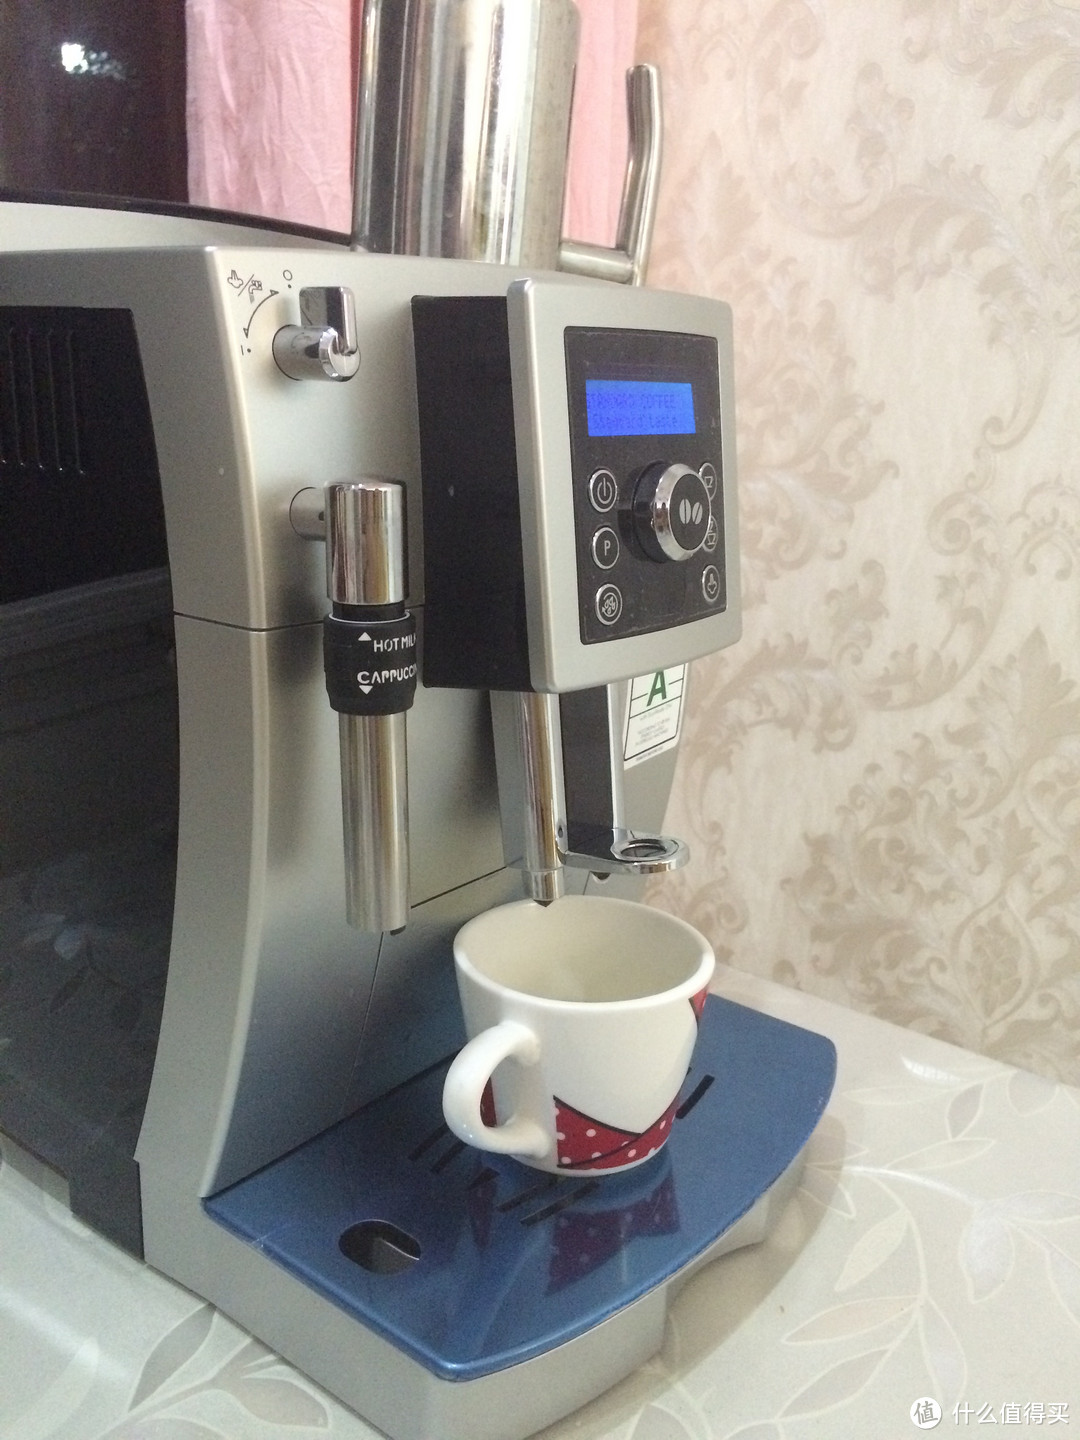 DeLonghi 德龙 ECAM 23.420 全自动咖啡机海淘购买开箱记